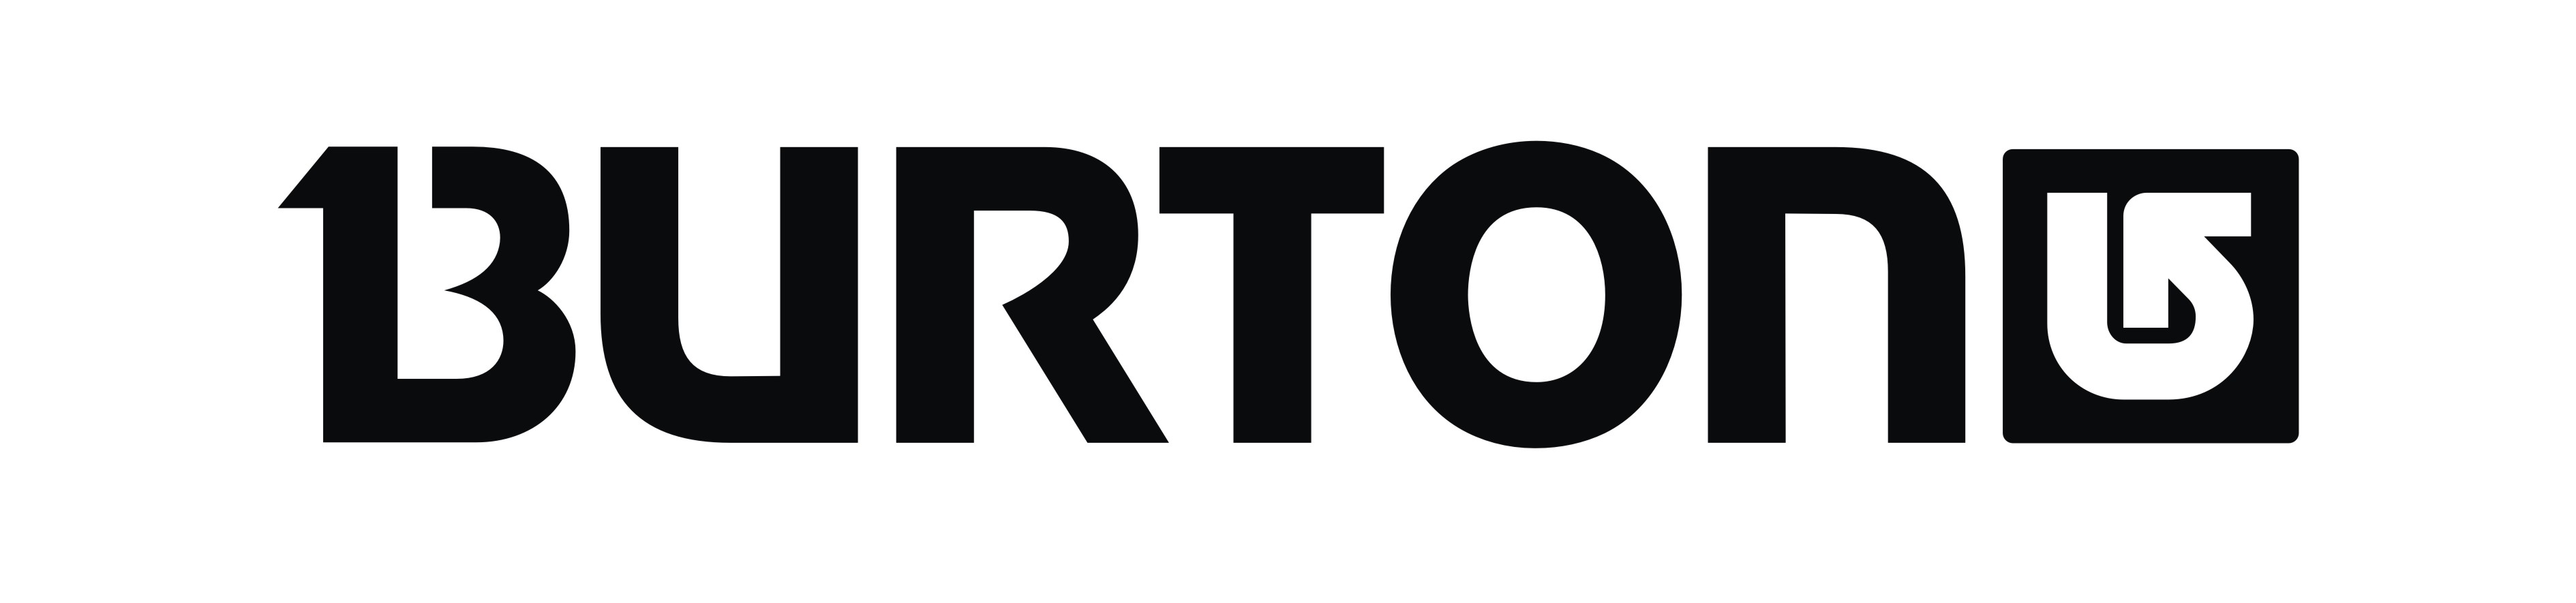 Burton snowboard Logos.